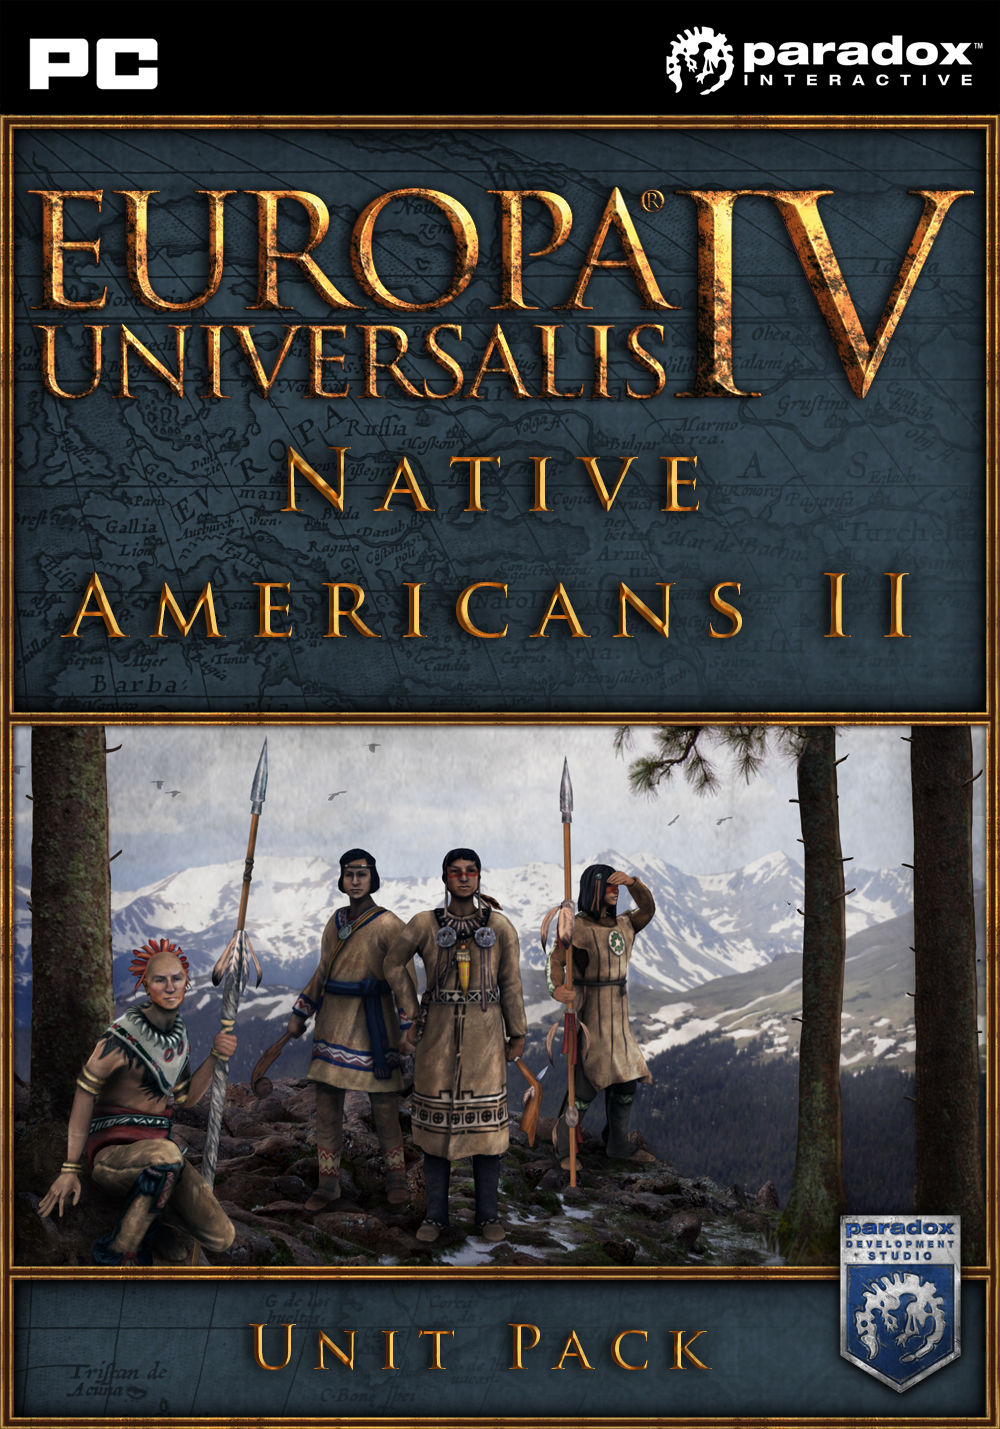 Europa Universalis IV: Native Americans II Unit Pack